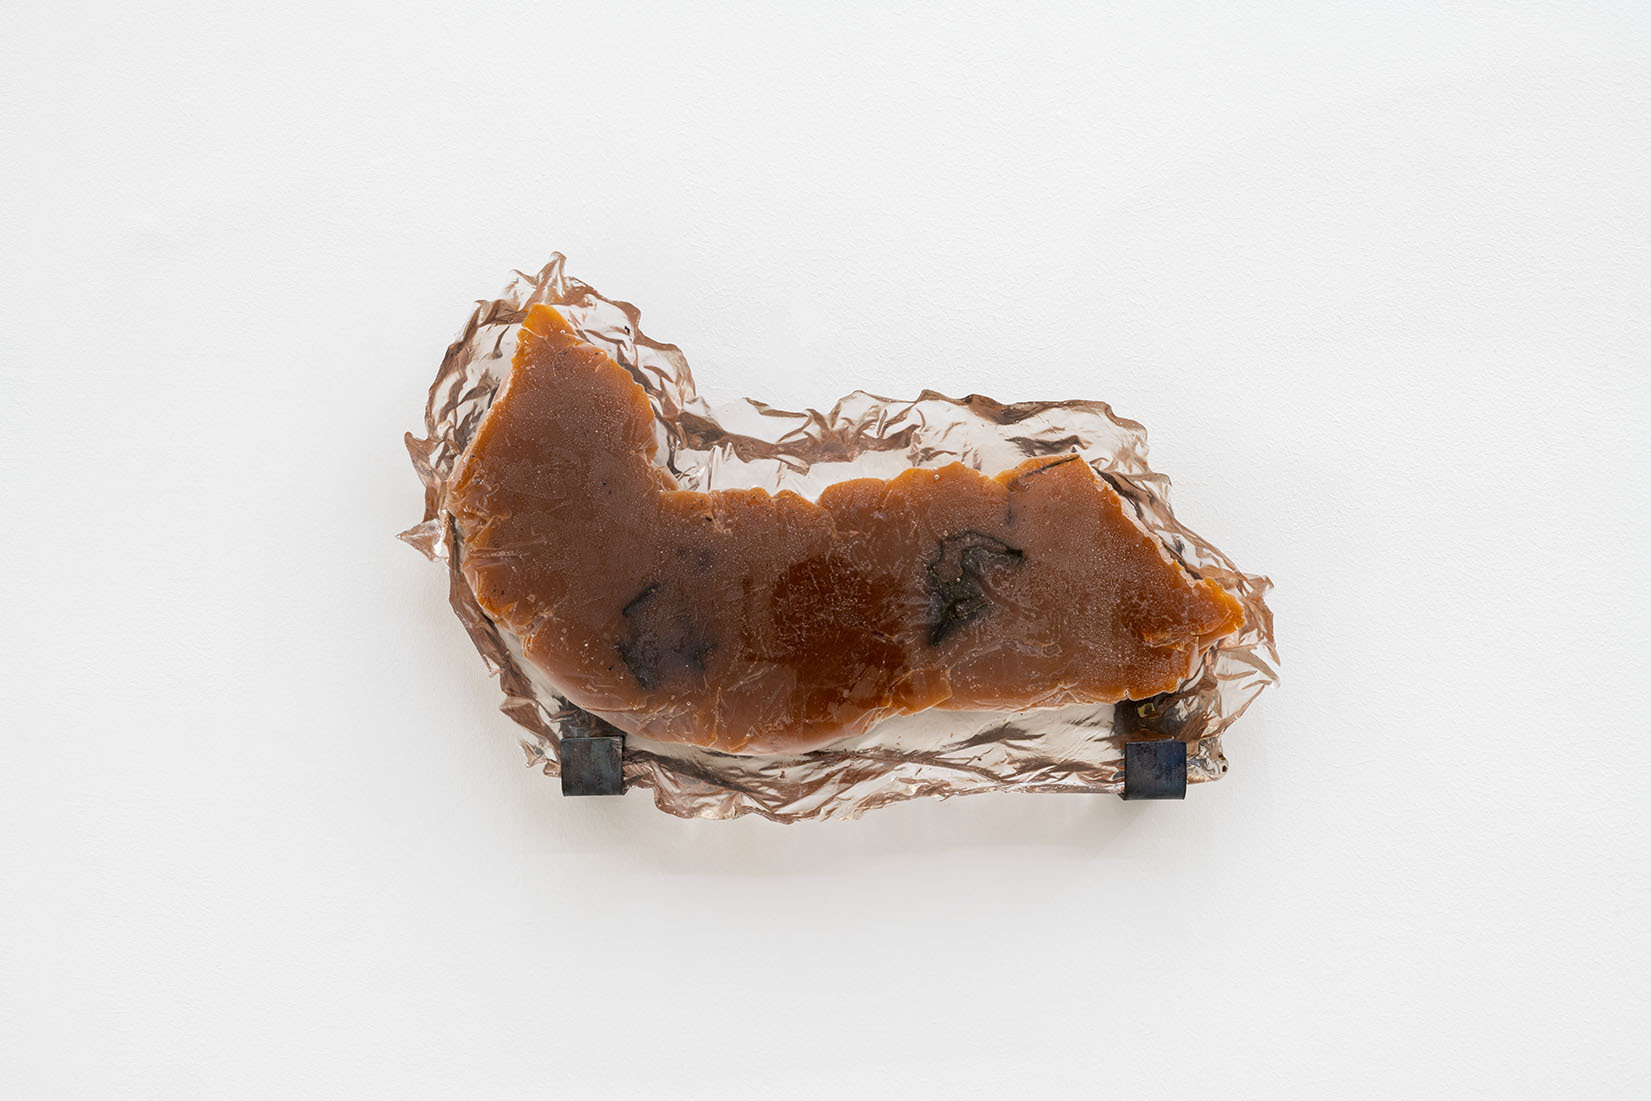 Bri Williams, Limb 2, 2021, Resin, soap, wax, leaves, thorny twigs, 26 x 43 x 5.5 cm